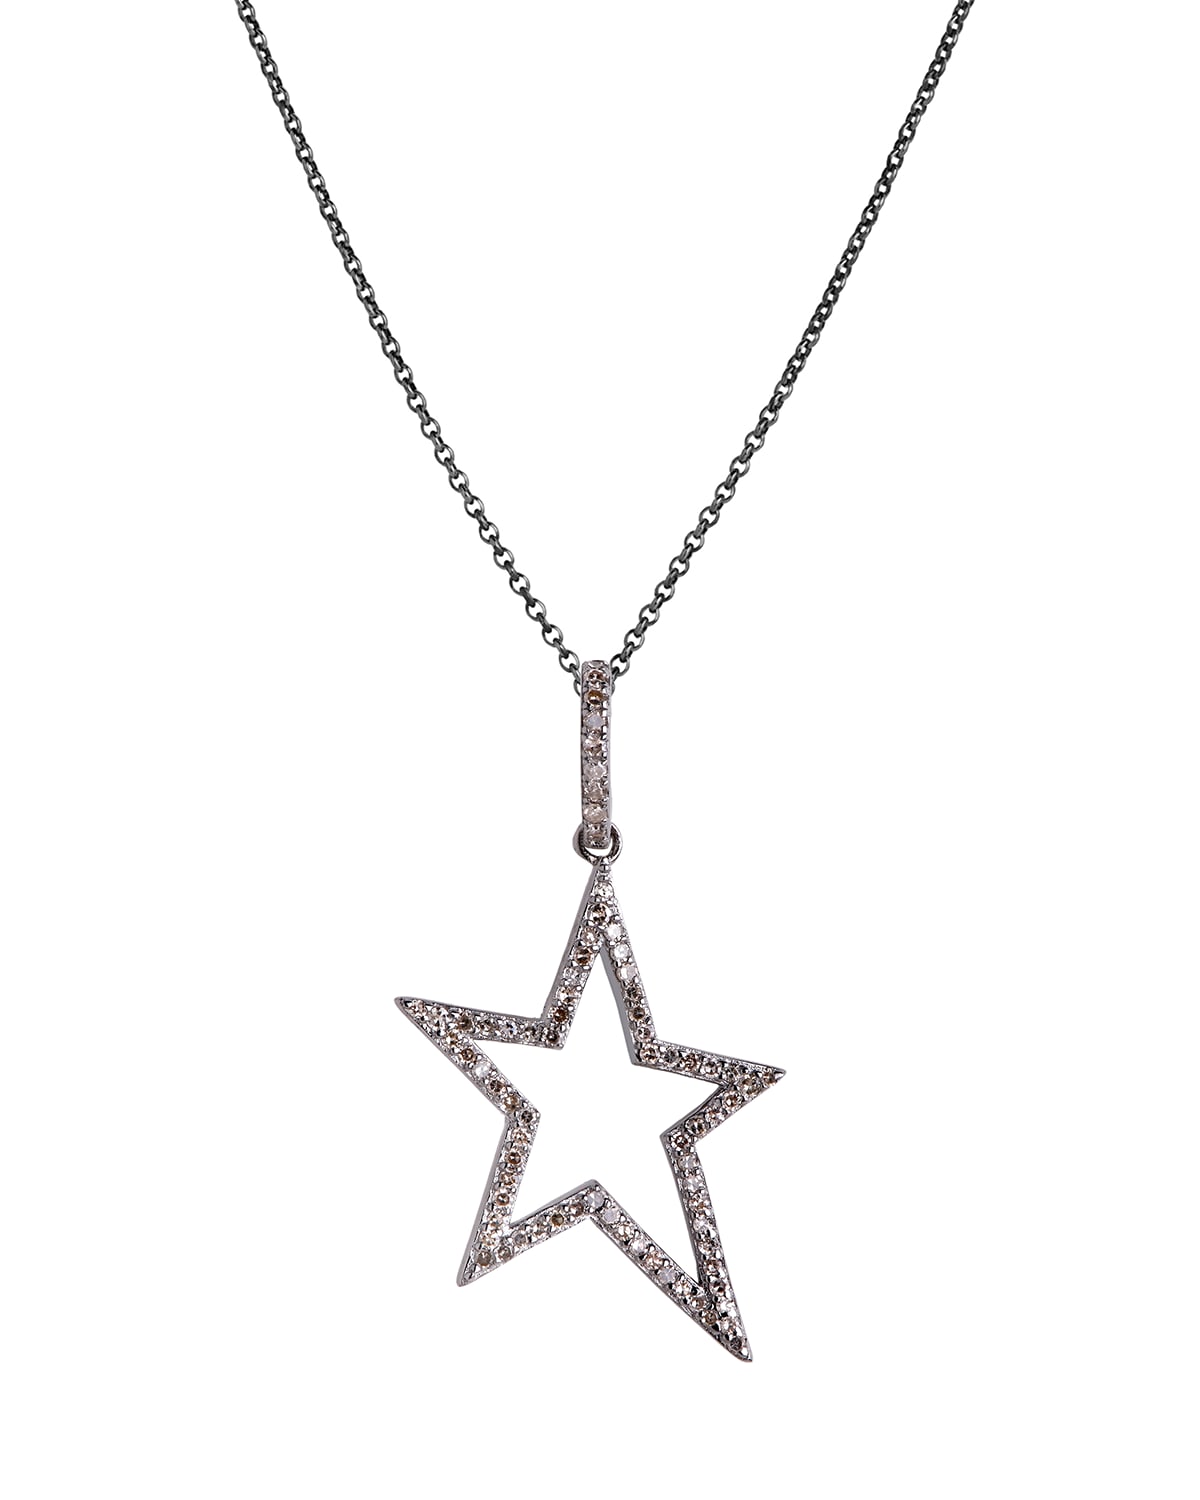 Bridget King Jewelry Hollow Diamond Star Necklace